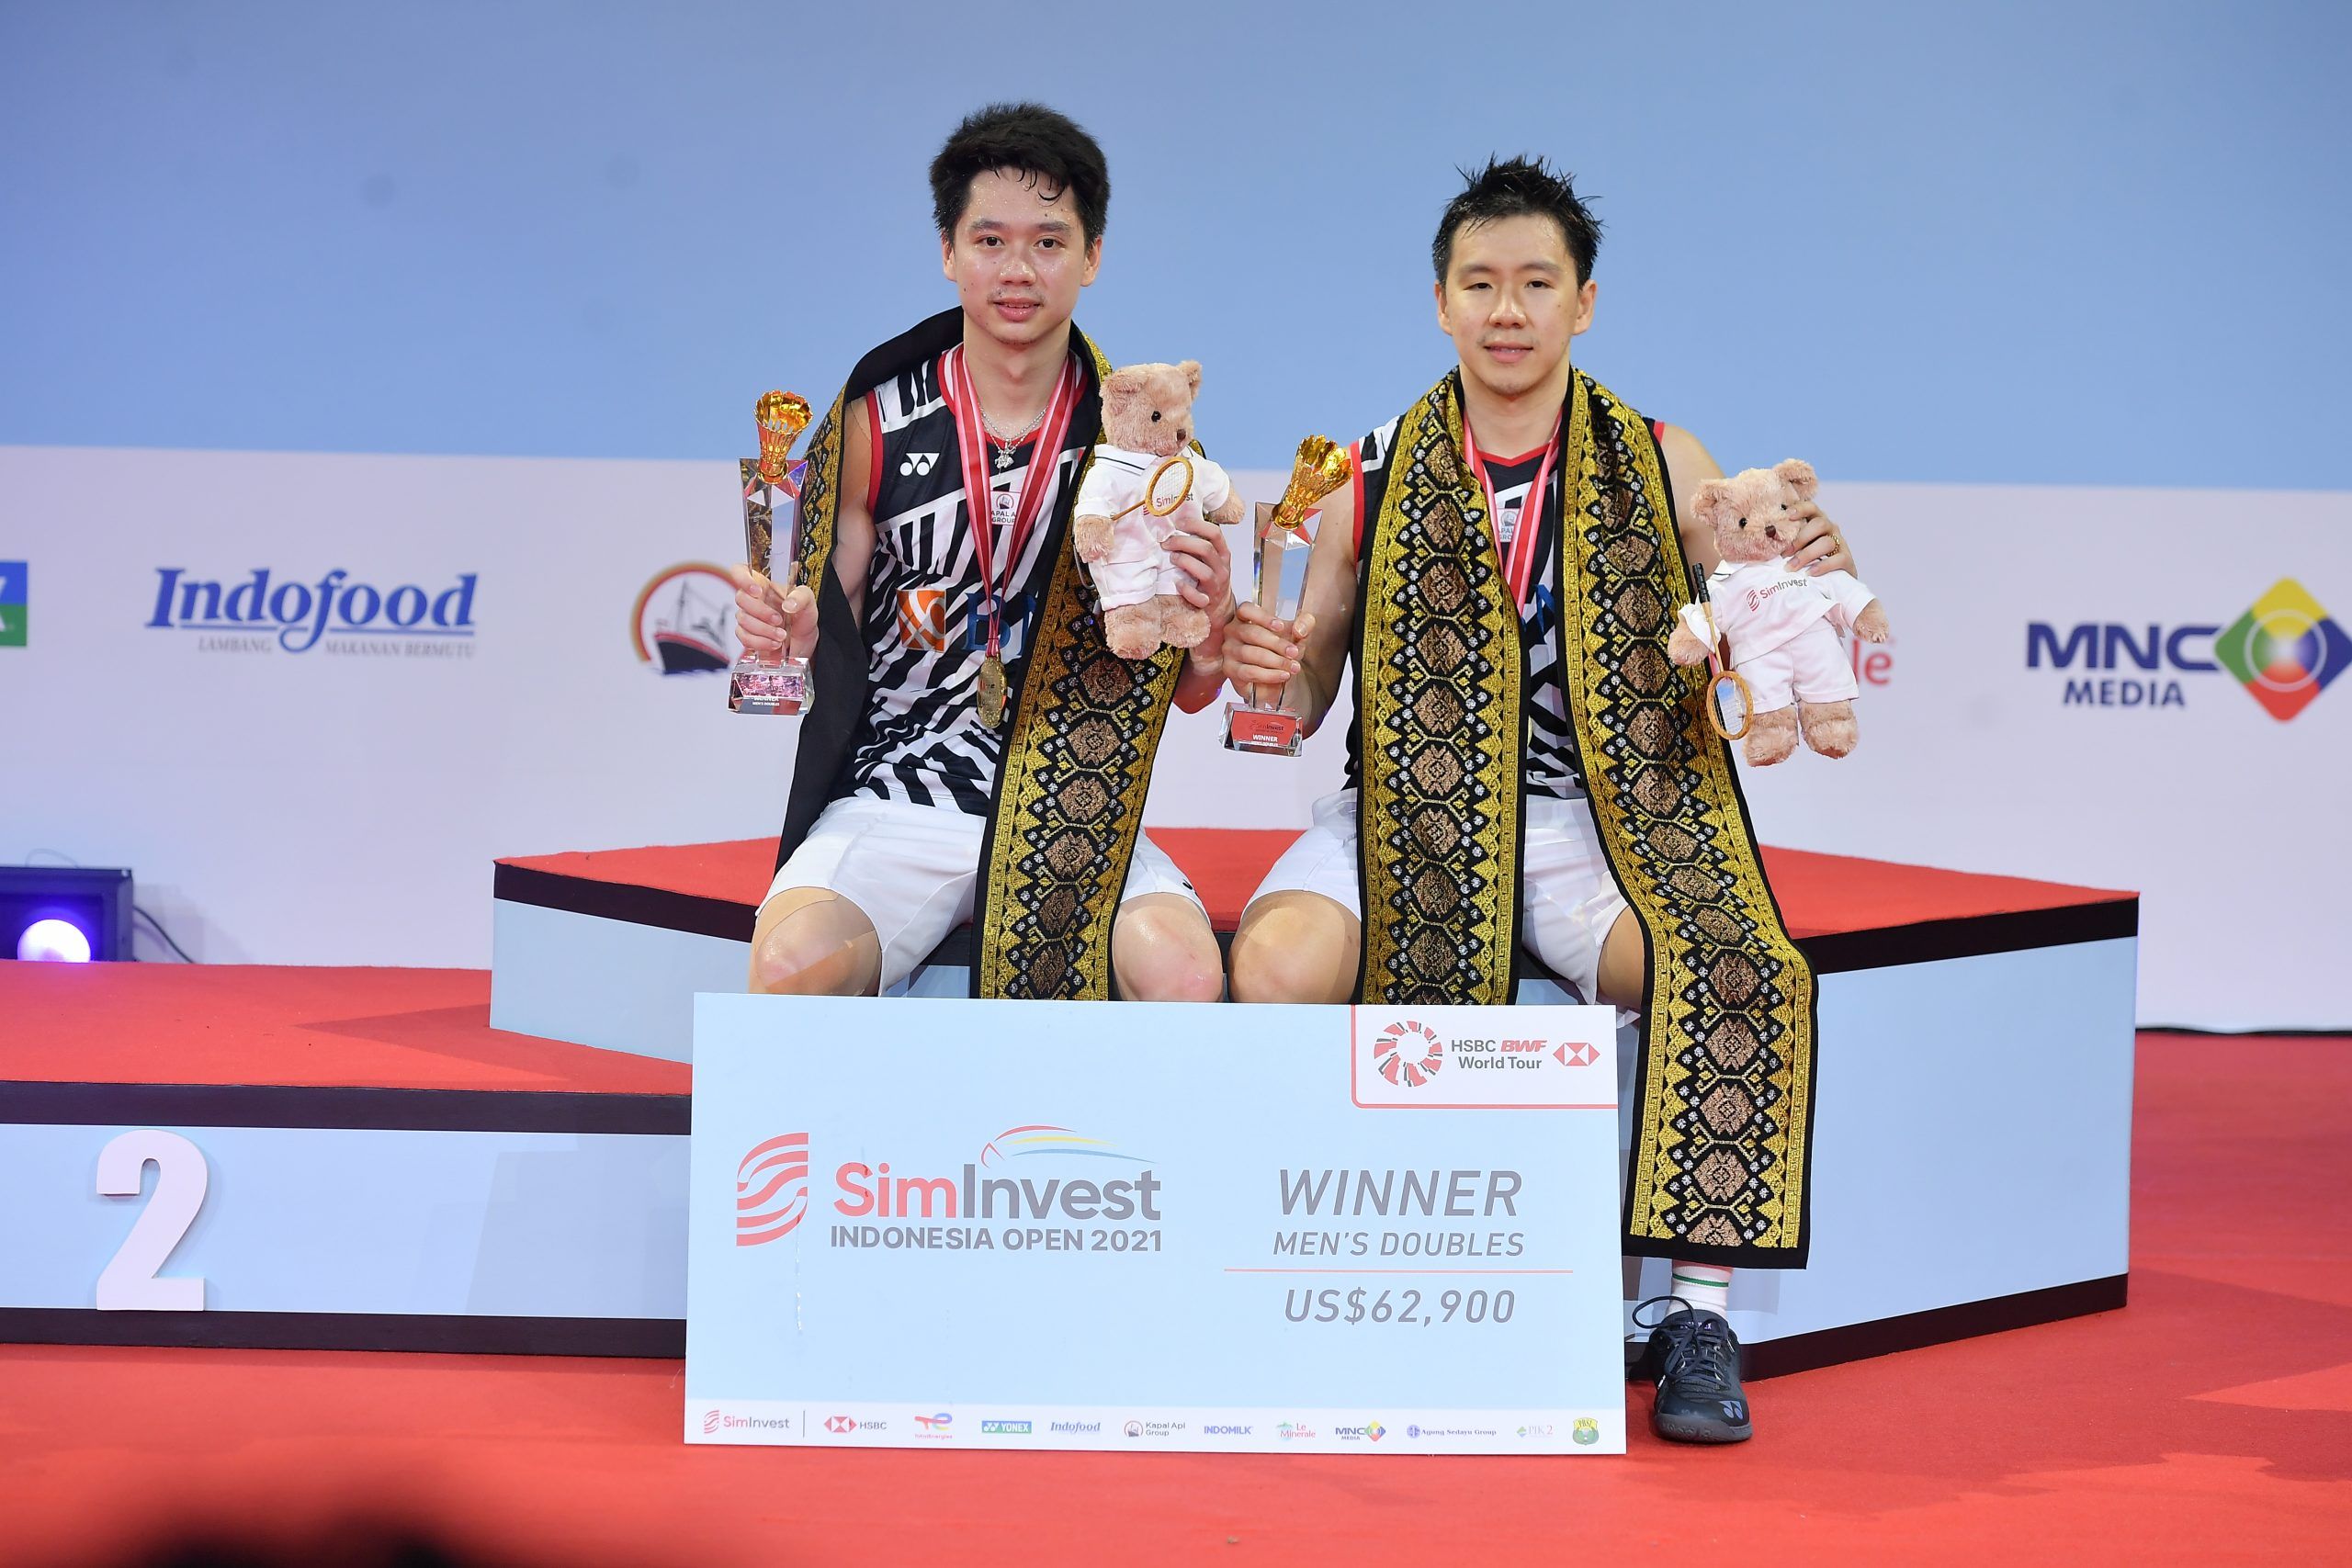 Kevin Sanjaya Sukamuljo dan Marcus Fernaldi Gideon, pemenang ganda putra Indonesia Open 2021/pbsi.id 